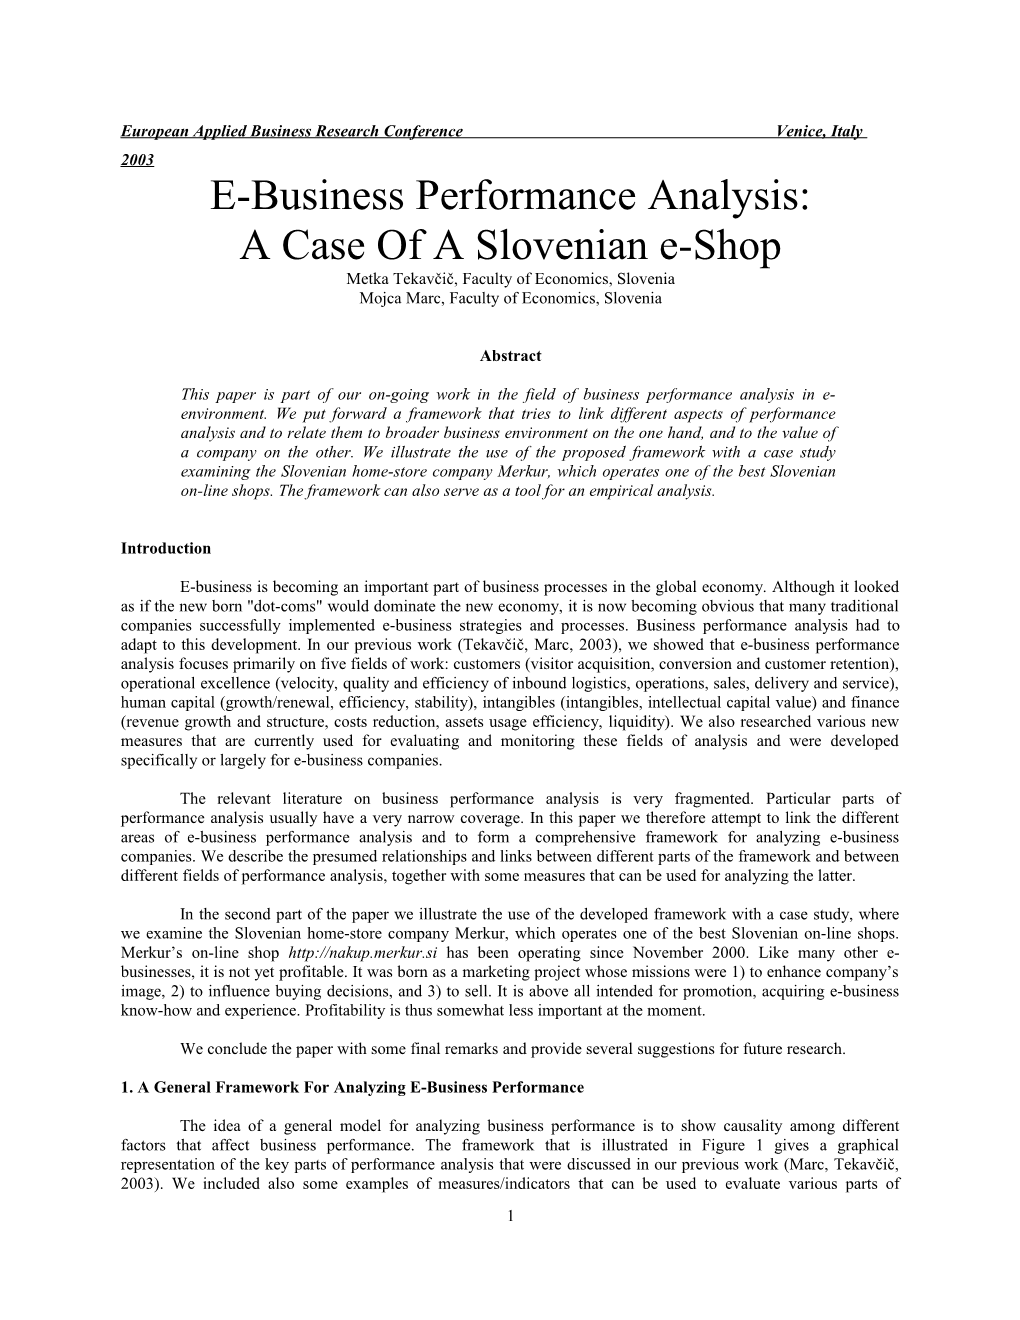 E-Business Performance Analysis